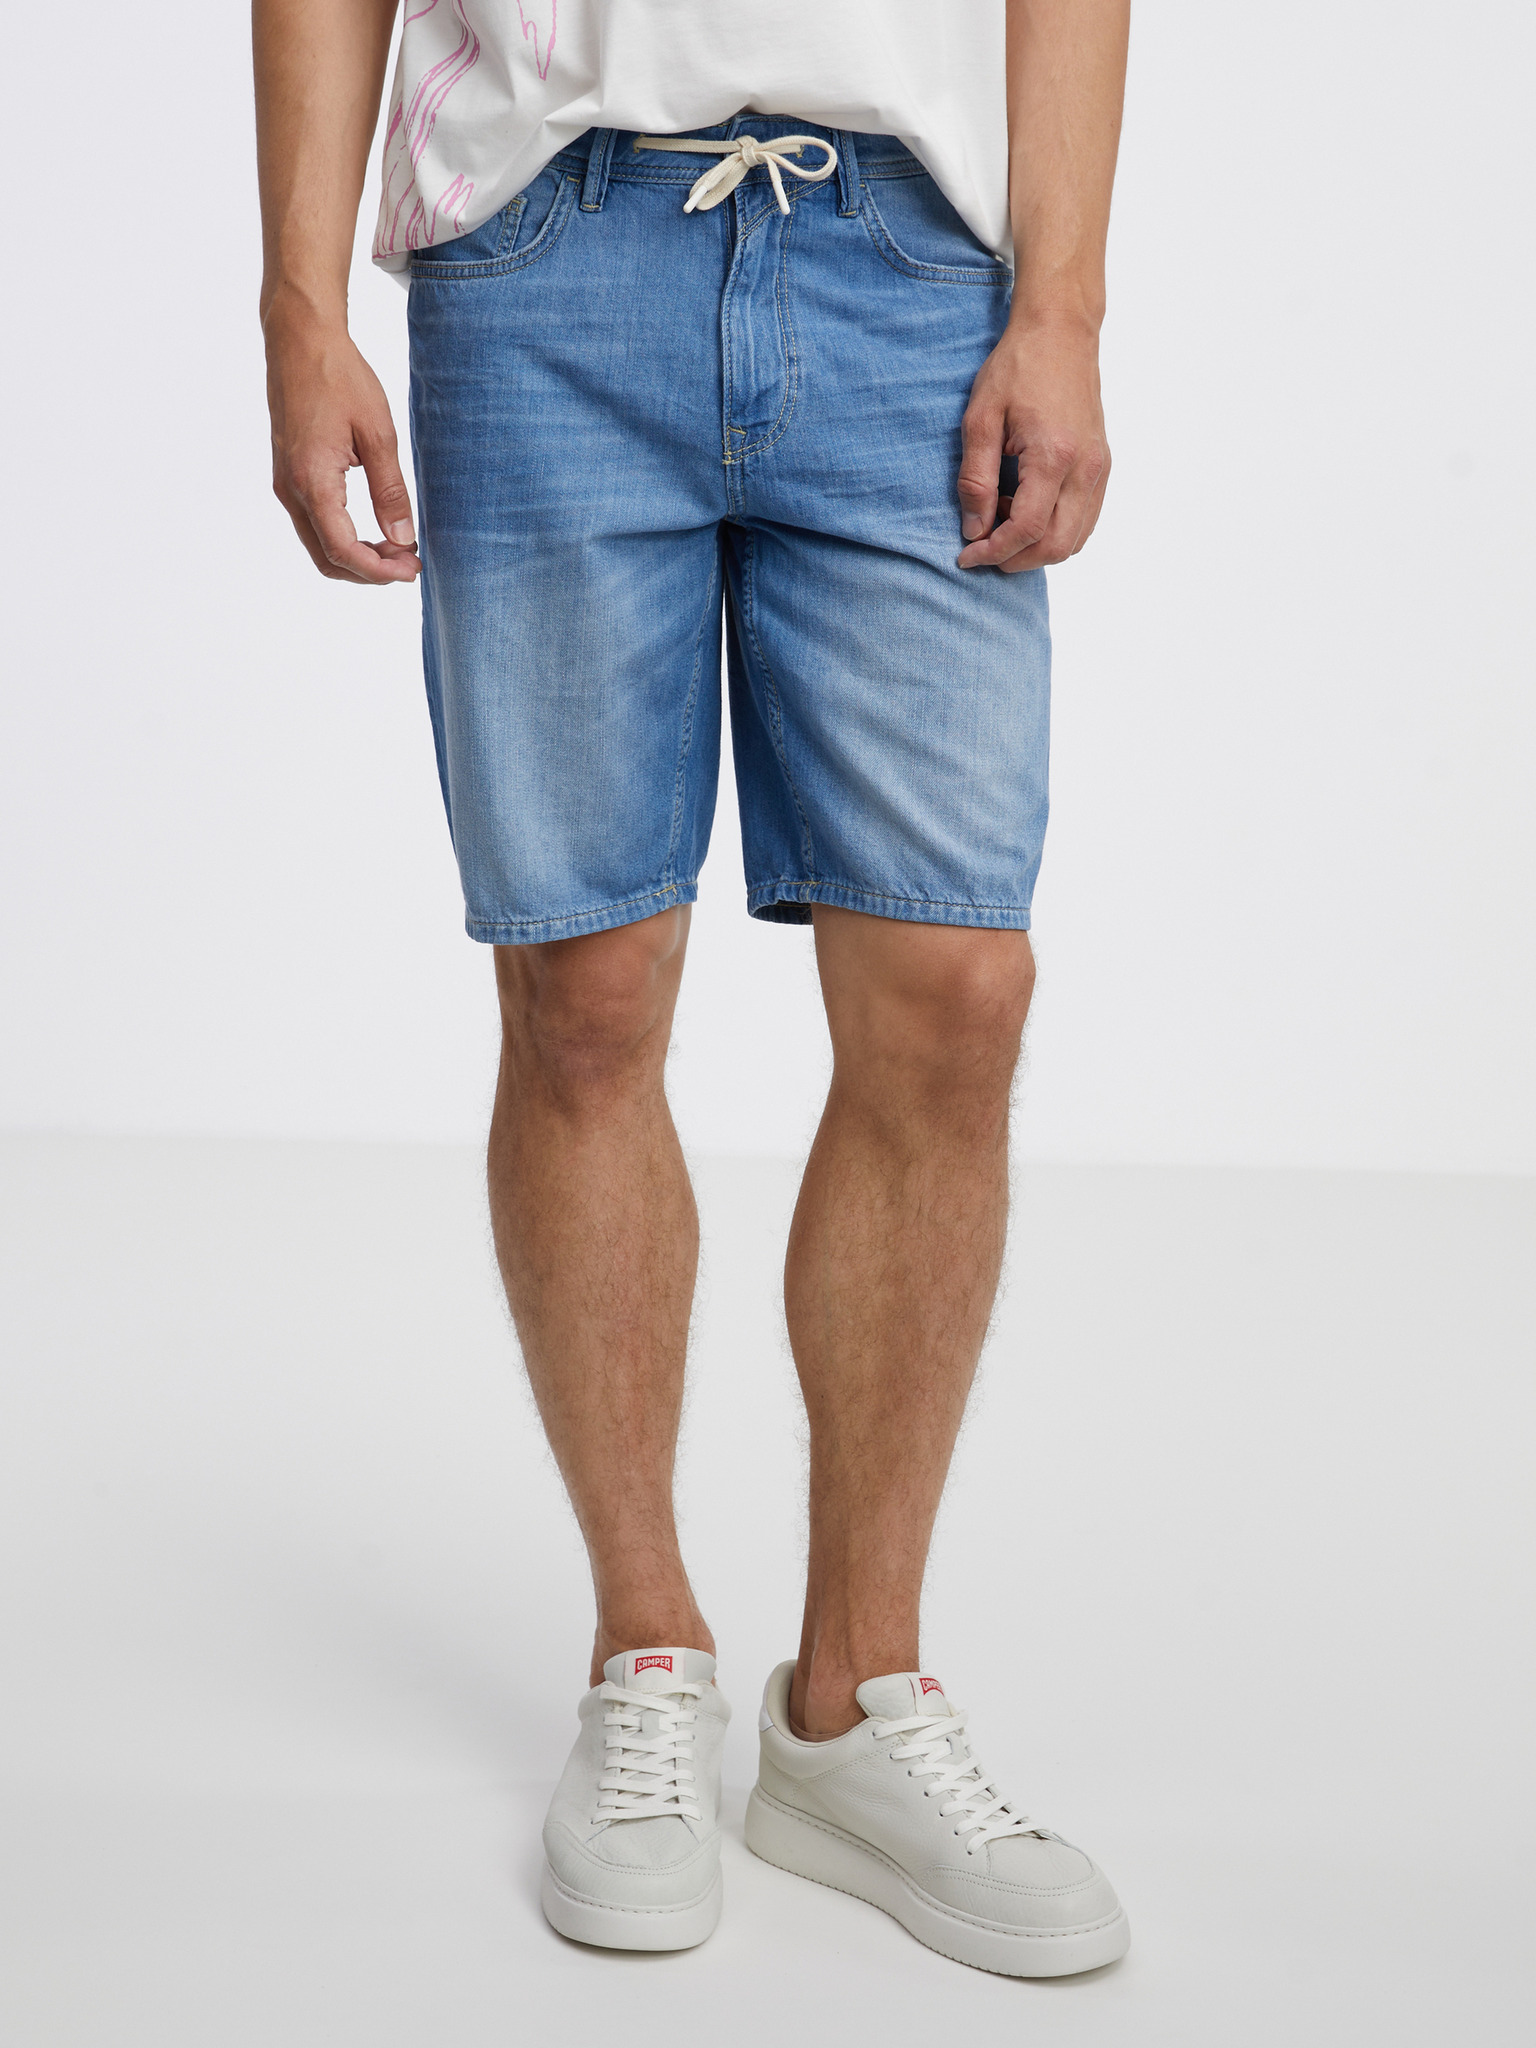 Jeans For Men Casual Shorts Spring Mens Pocket Sports Summer Bodybuilding Denim  Short Pants - Walmart.com